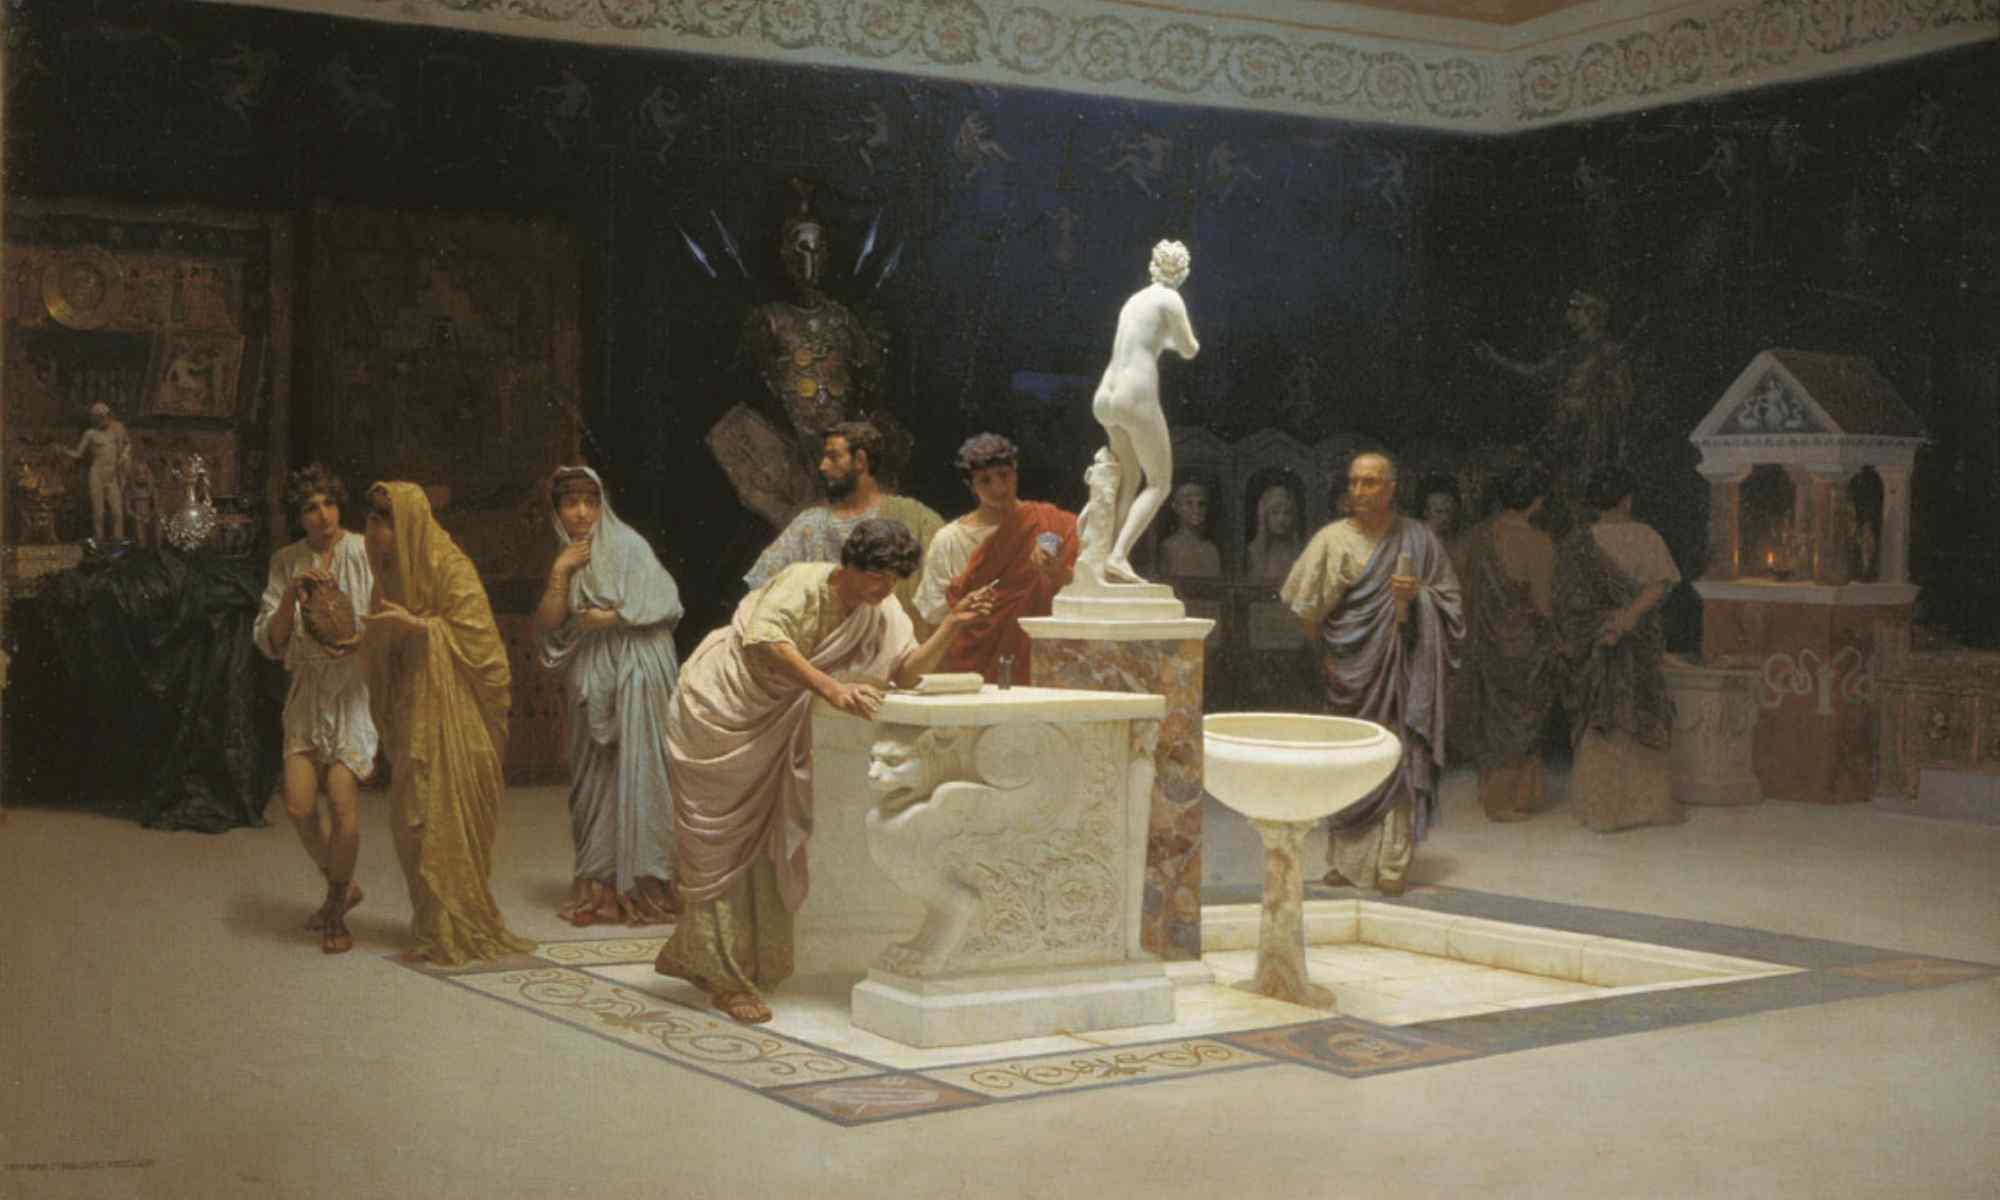 Dipinto di Stefan Bakałowicz del 1890, Circolo di Mecenate